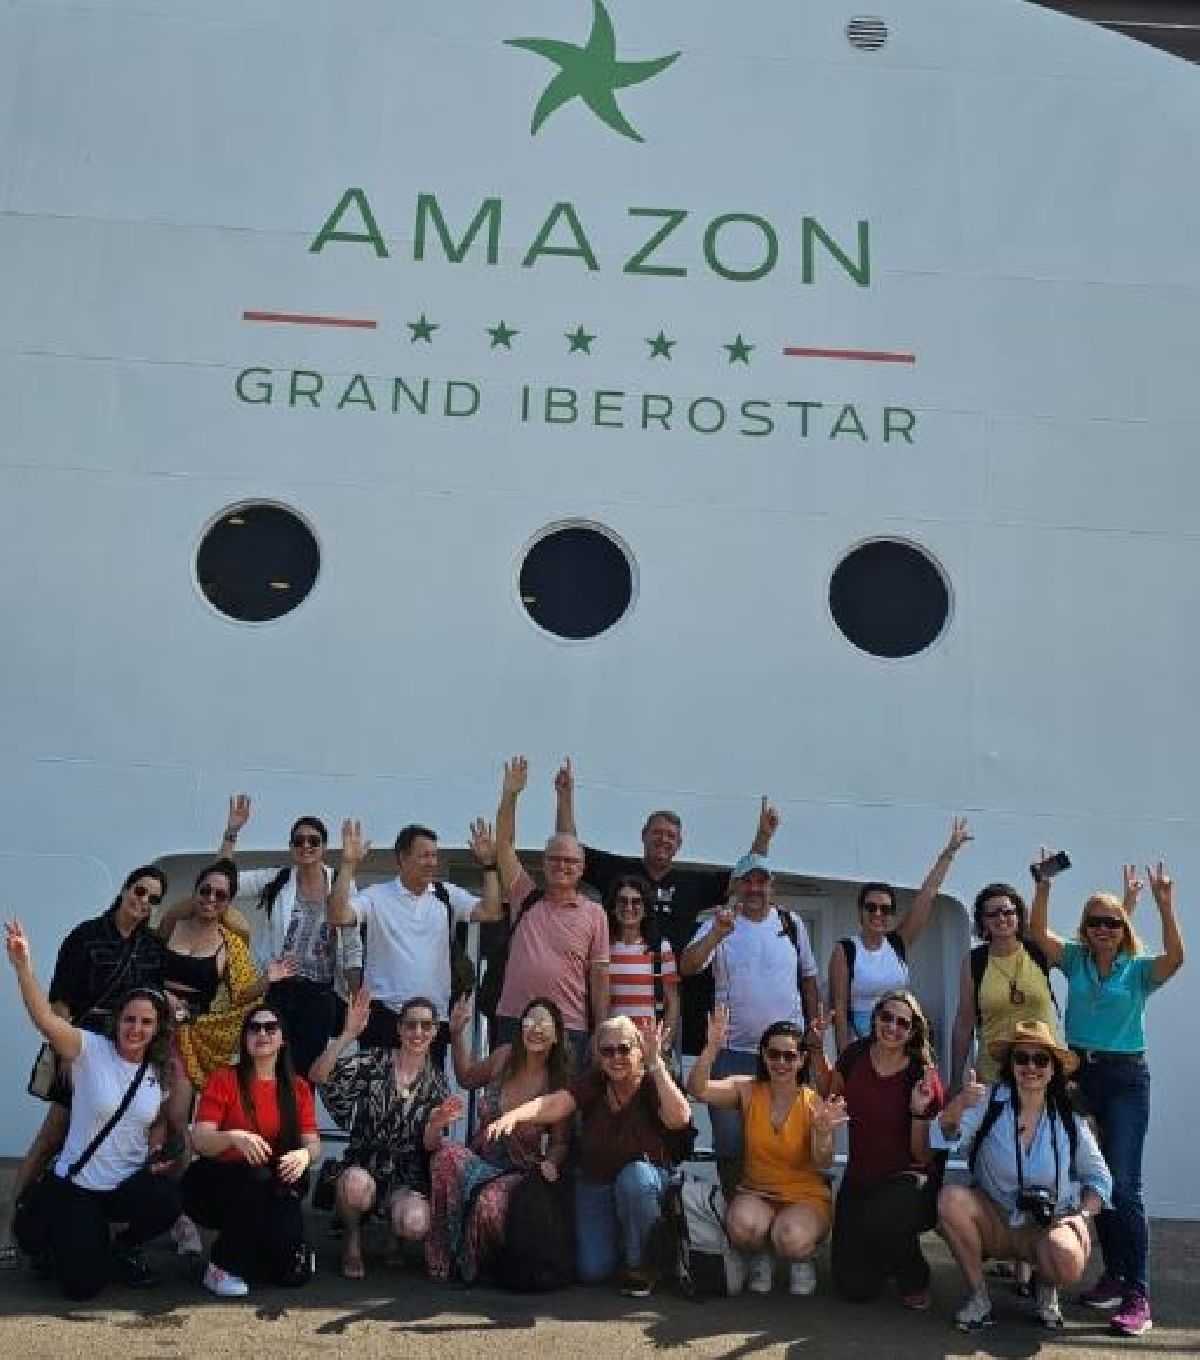 Schultz promove experiência no Iberostar Grand Amazon